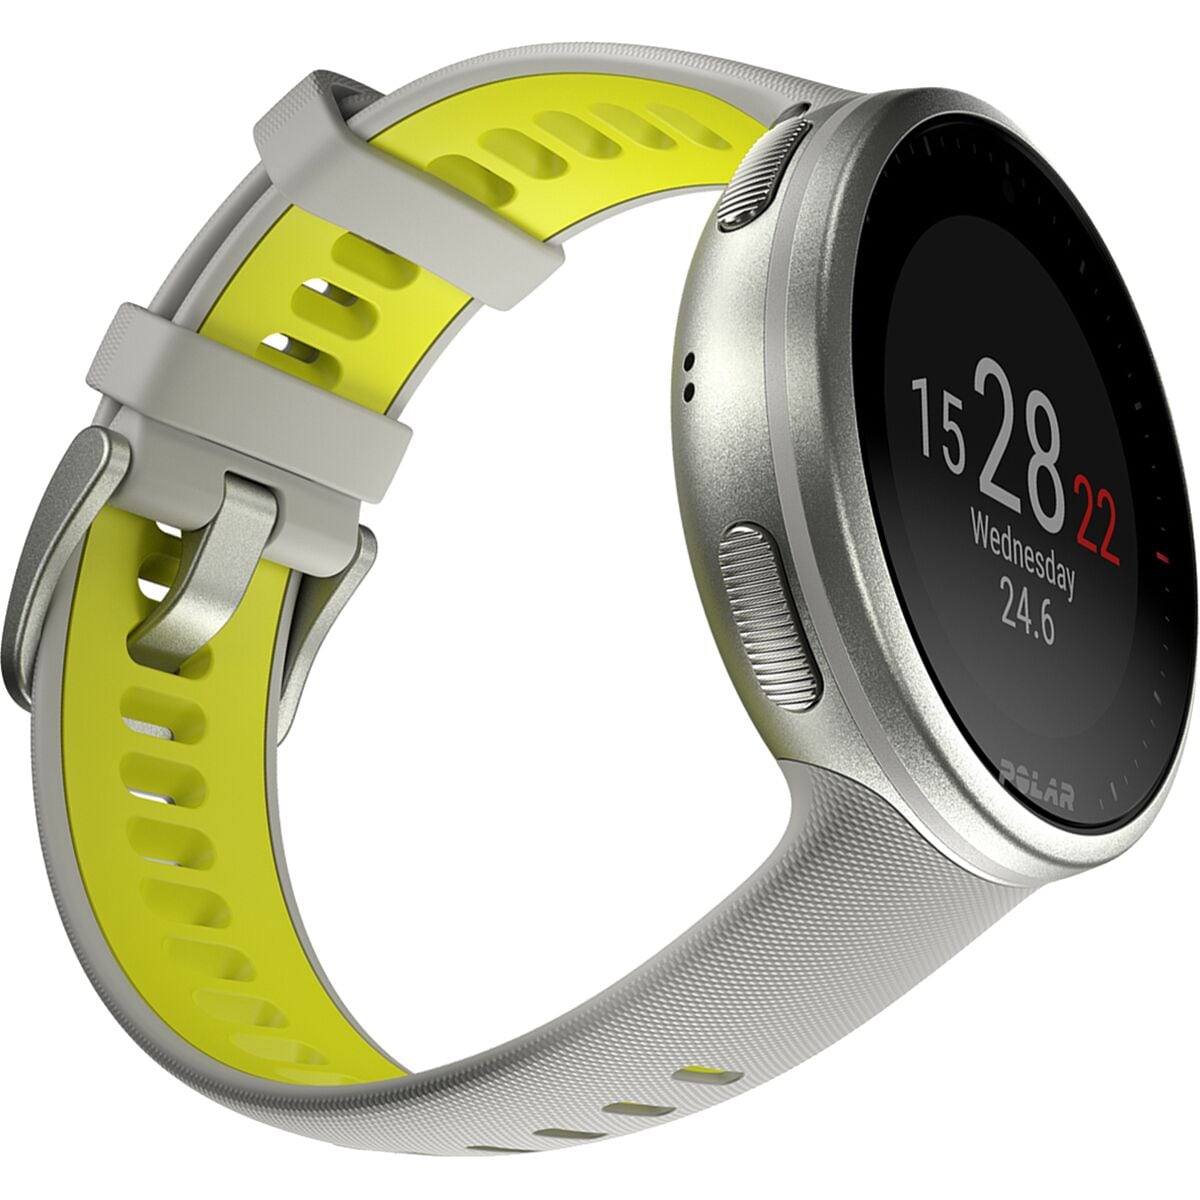 Review: Polar Vantage V2 smartwatch sleep tracker